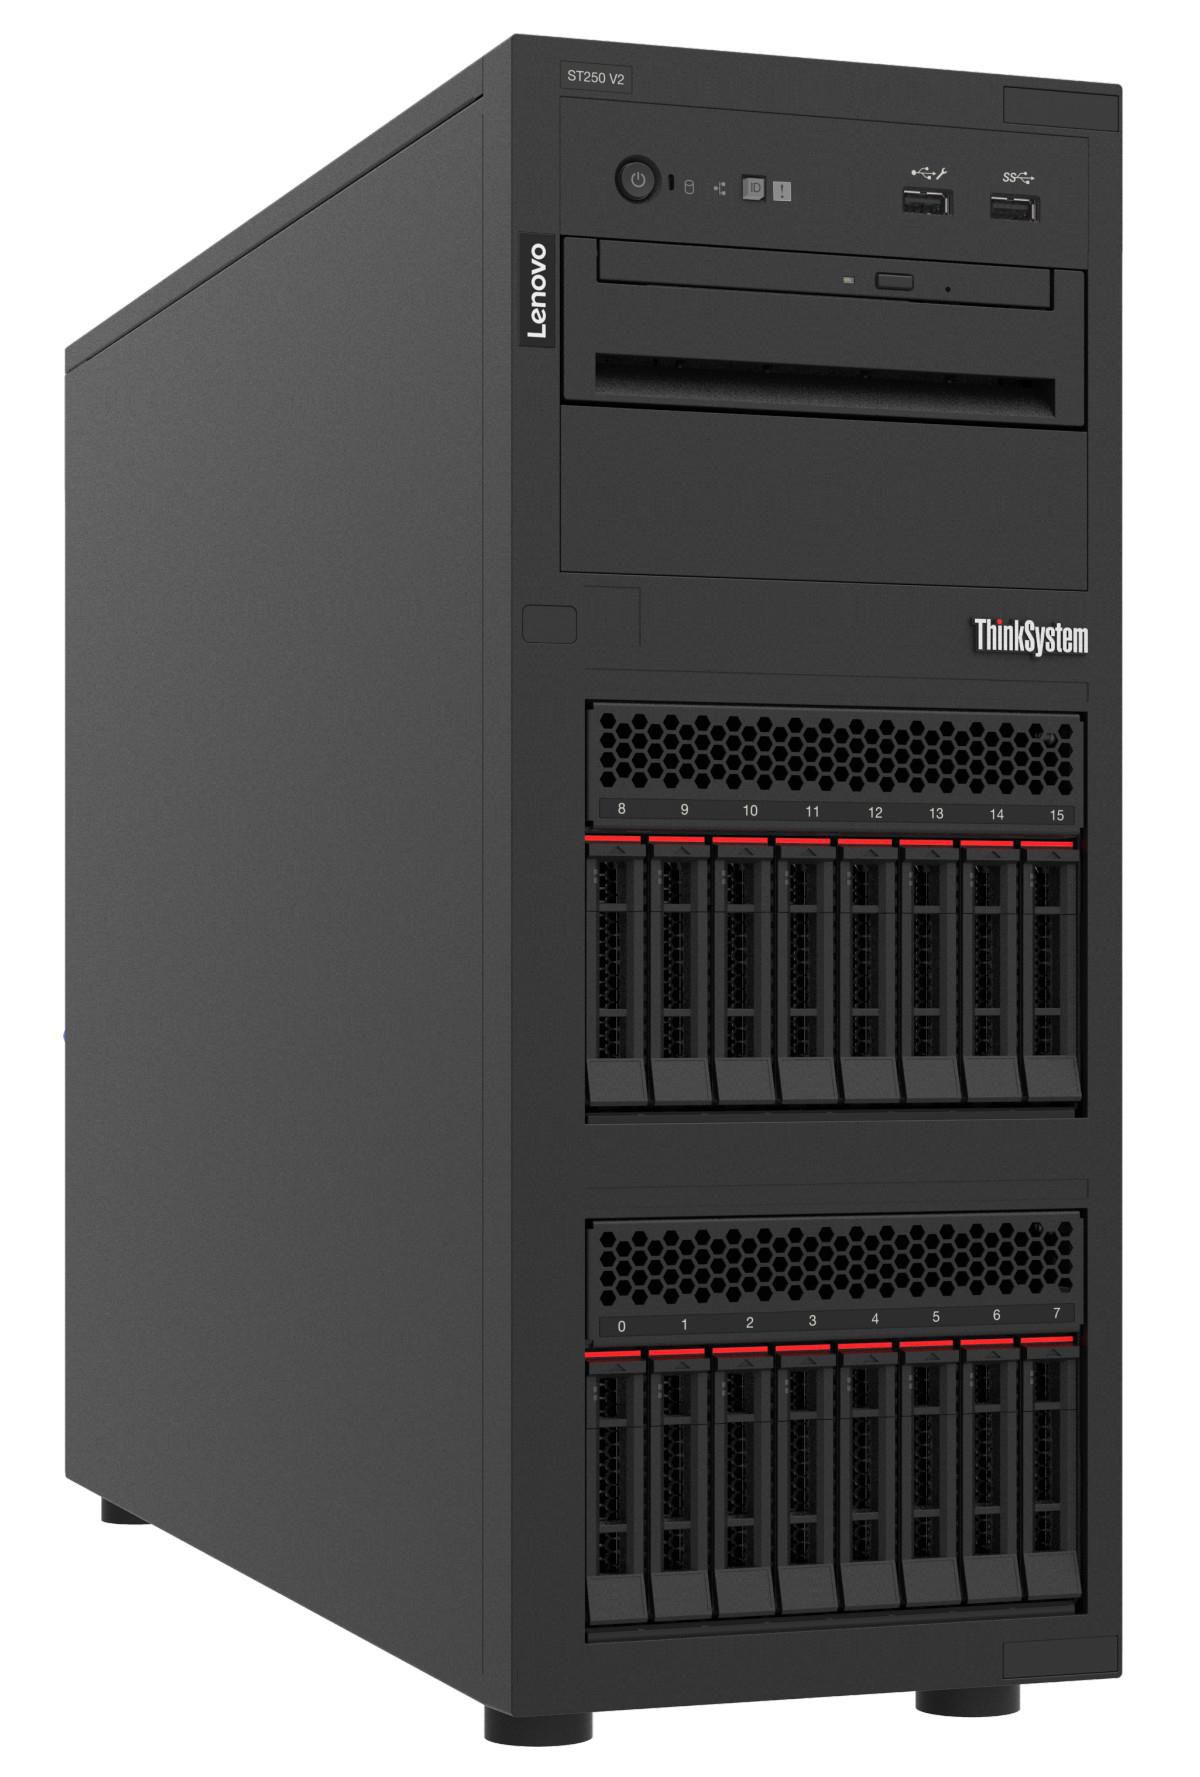 LENOVO ISG ThinkSystem ST250 V2 Xeon E-2356G 6C 3.2GHz 12MB Cache/80W 1x32GB O/B 2.5inch HS 8 5350-8